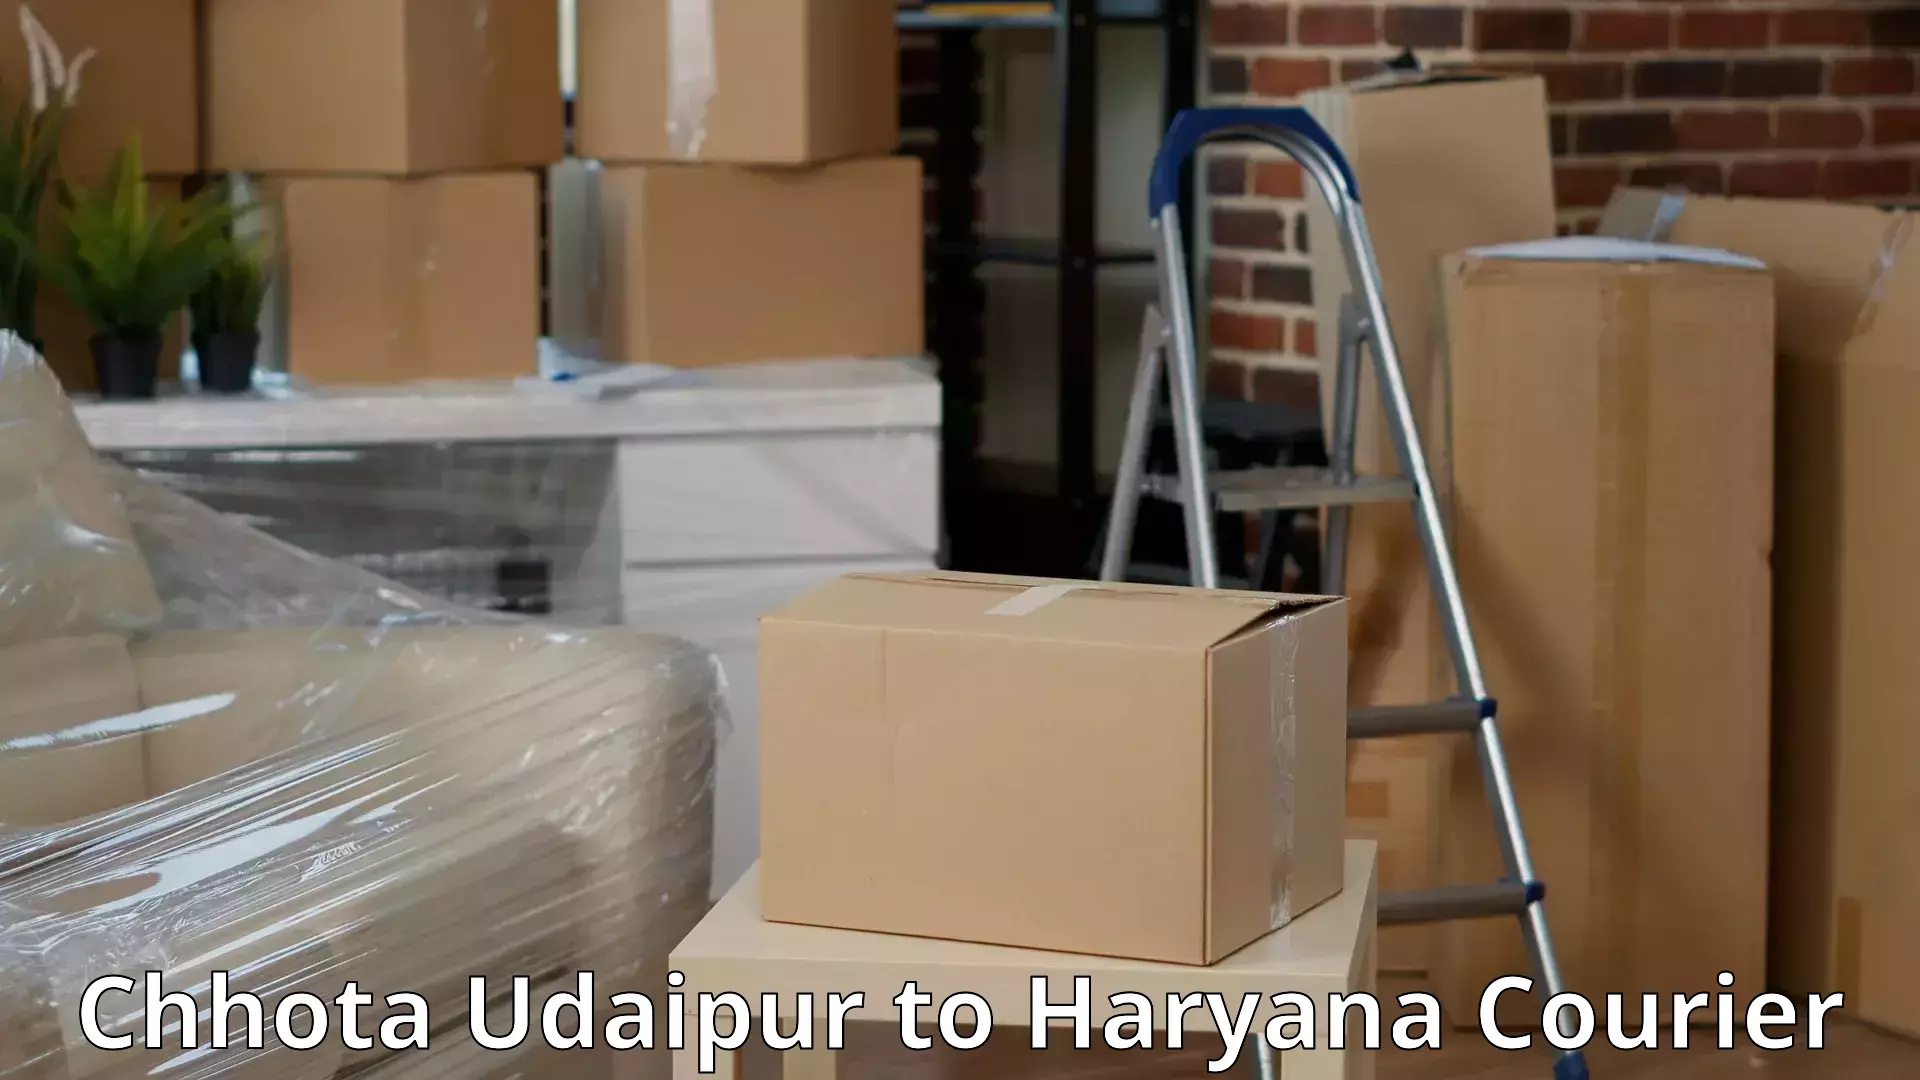 Professional moving company Chhota Udaipur to Bhuna